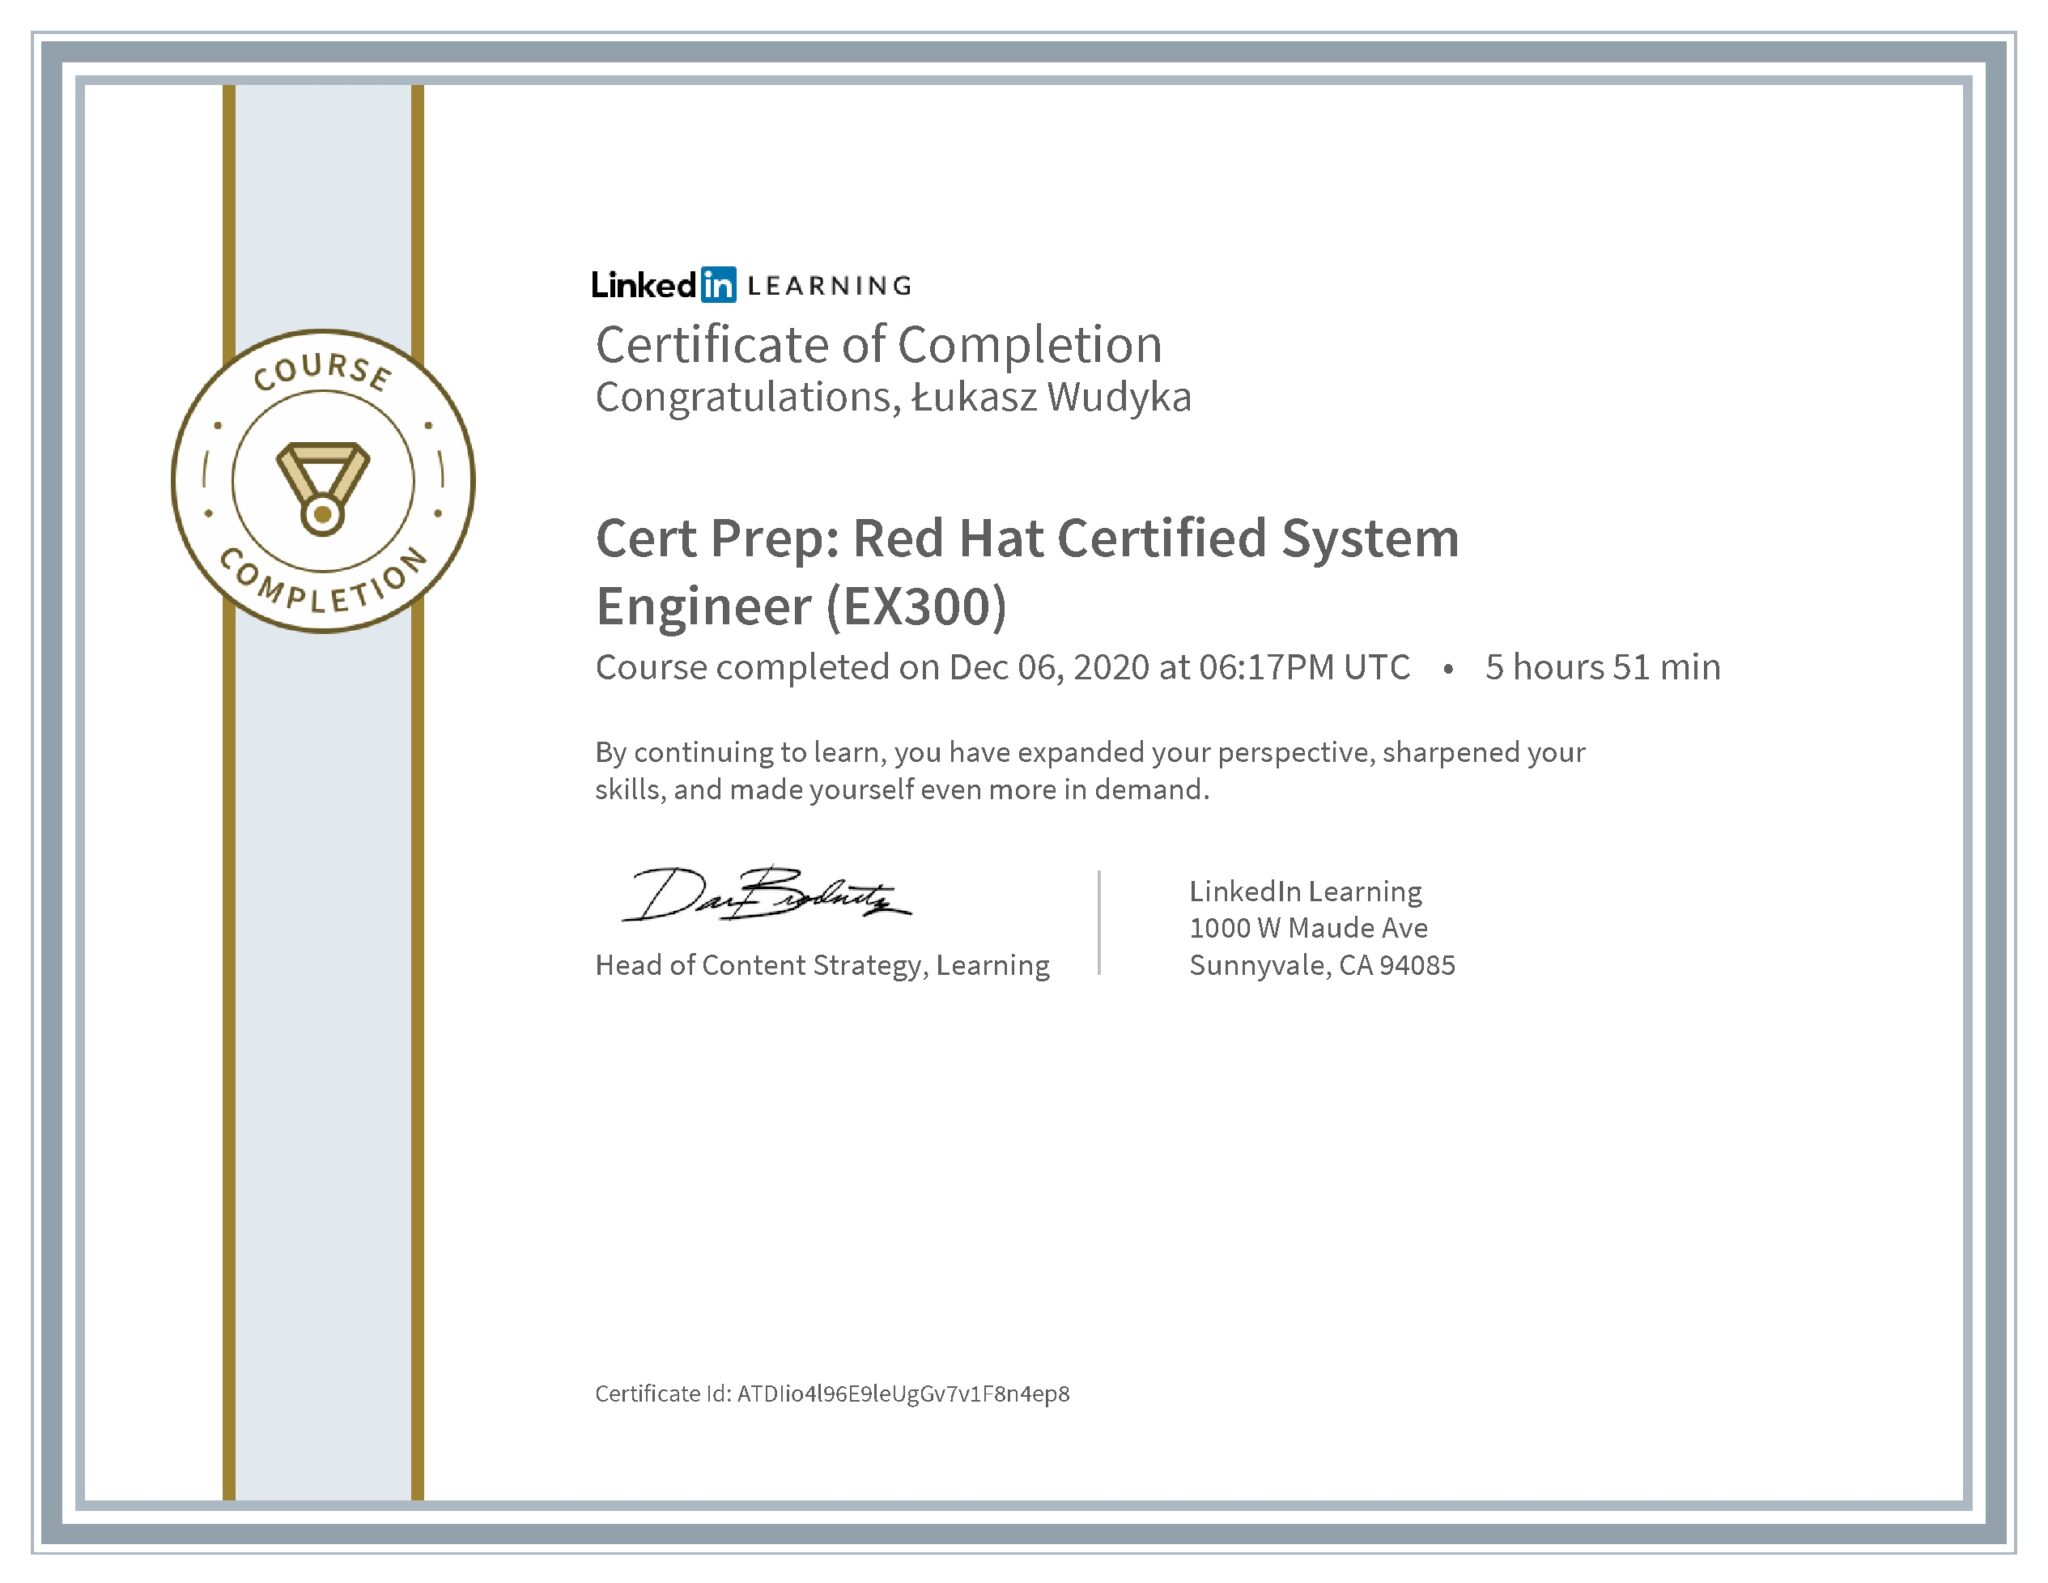 Łukasz Wudyka certyfikat LinkedIn Cert Prep: Red Hat Certified System Engineer (EX300)